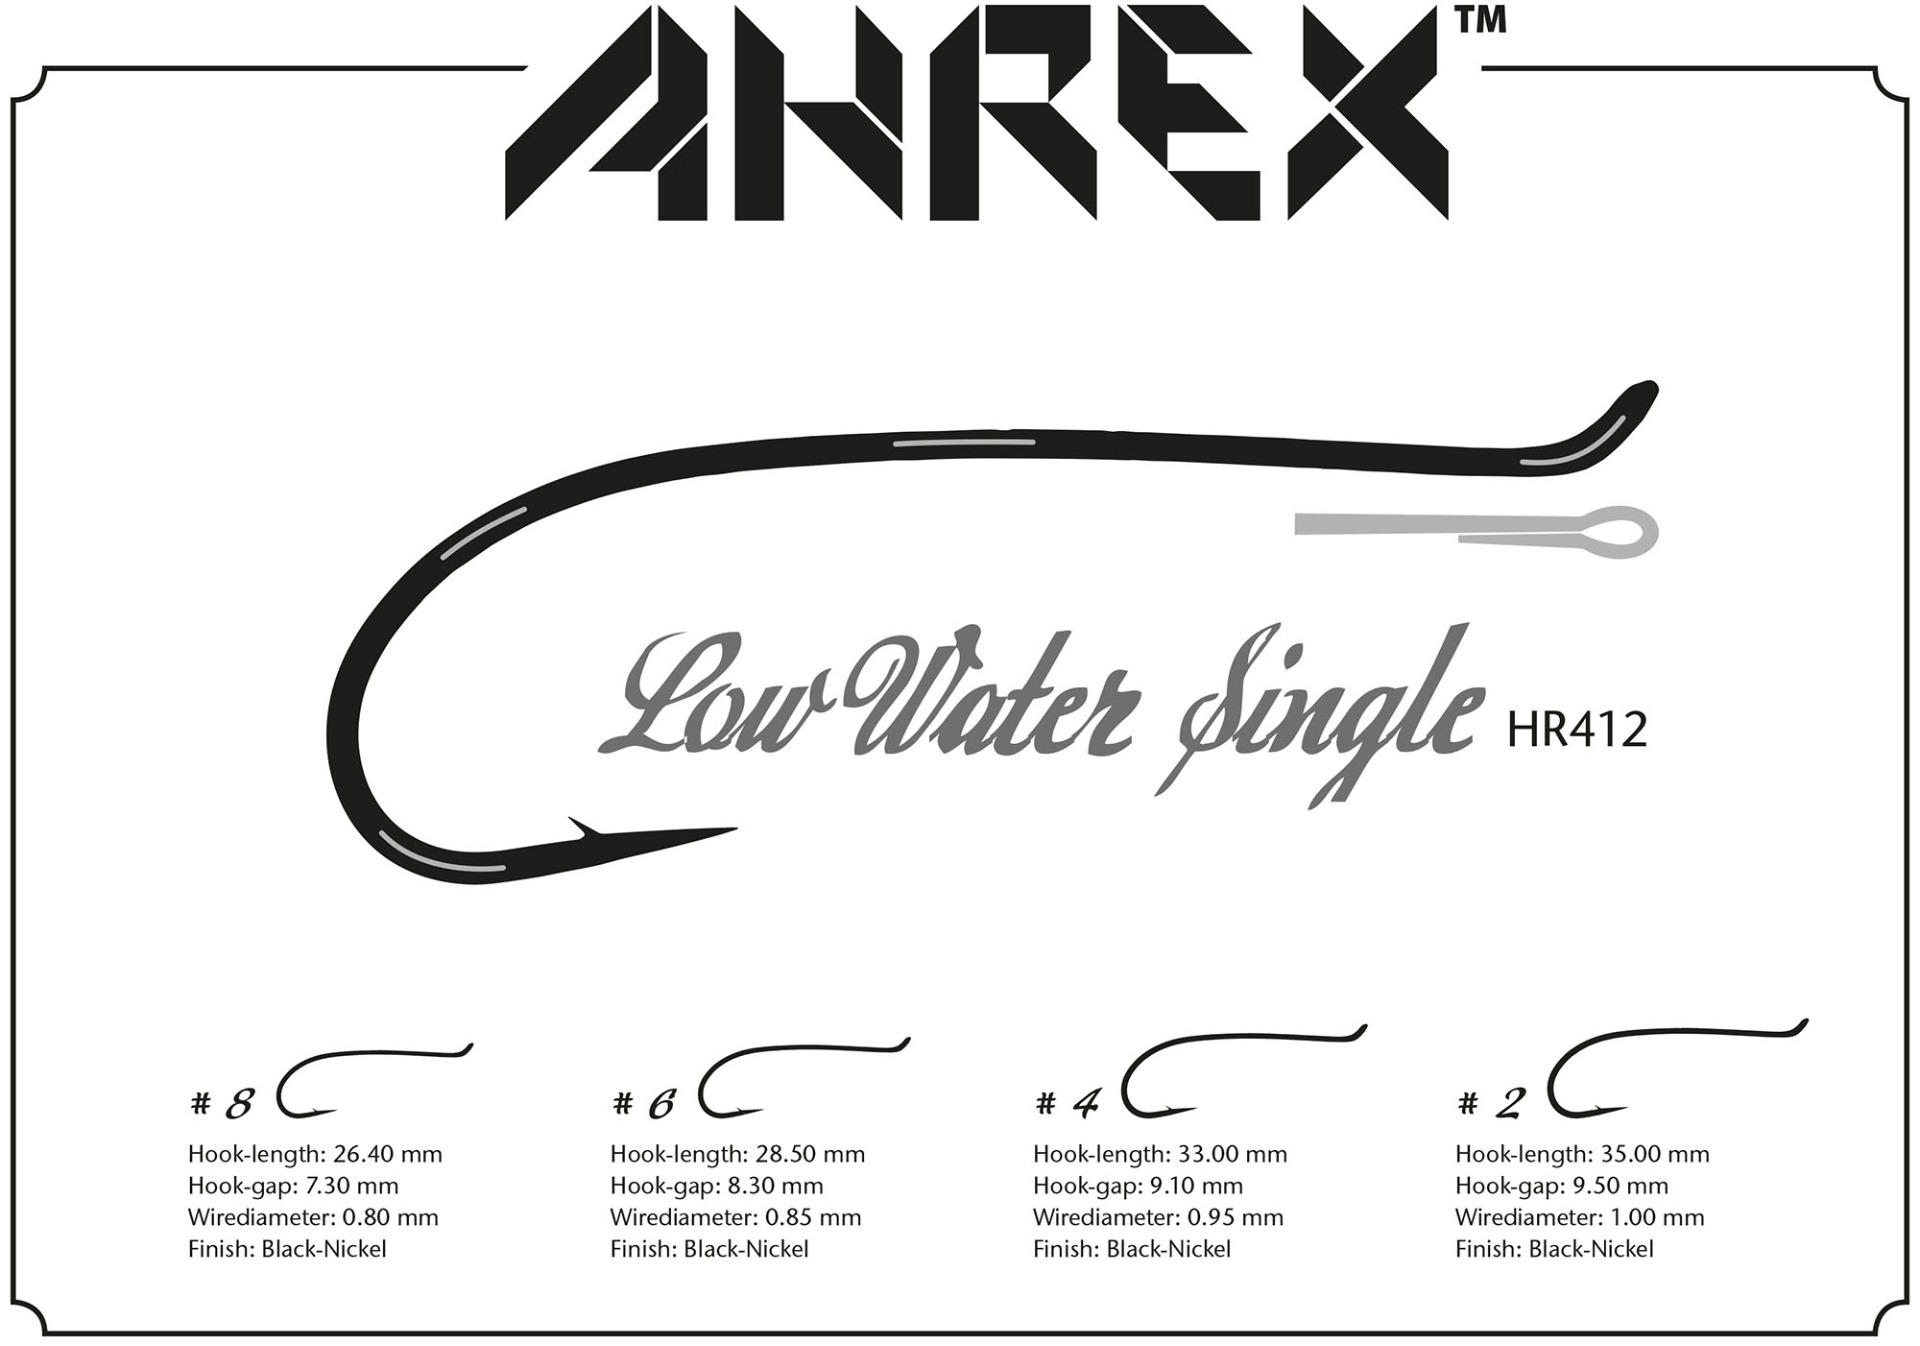 Ahrex Salmon Low Water Single #6